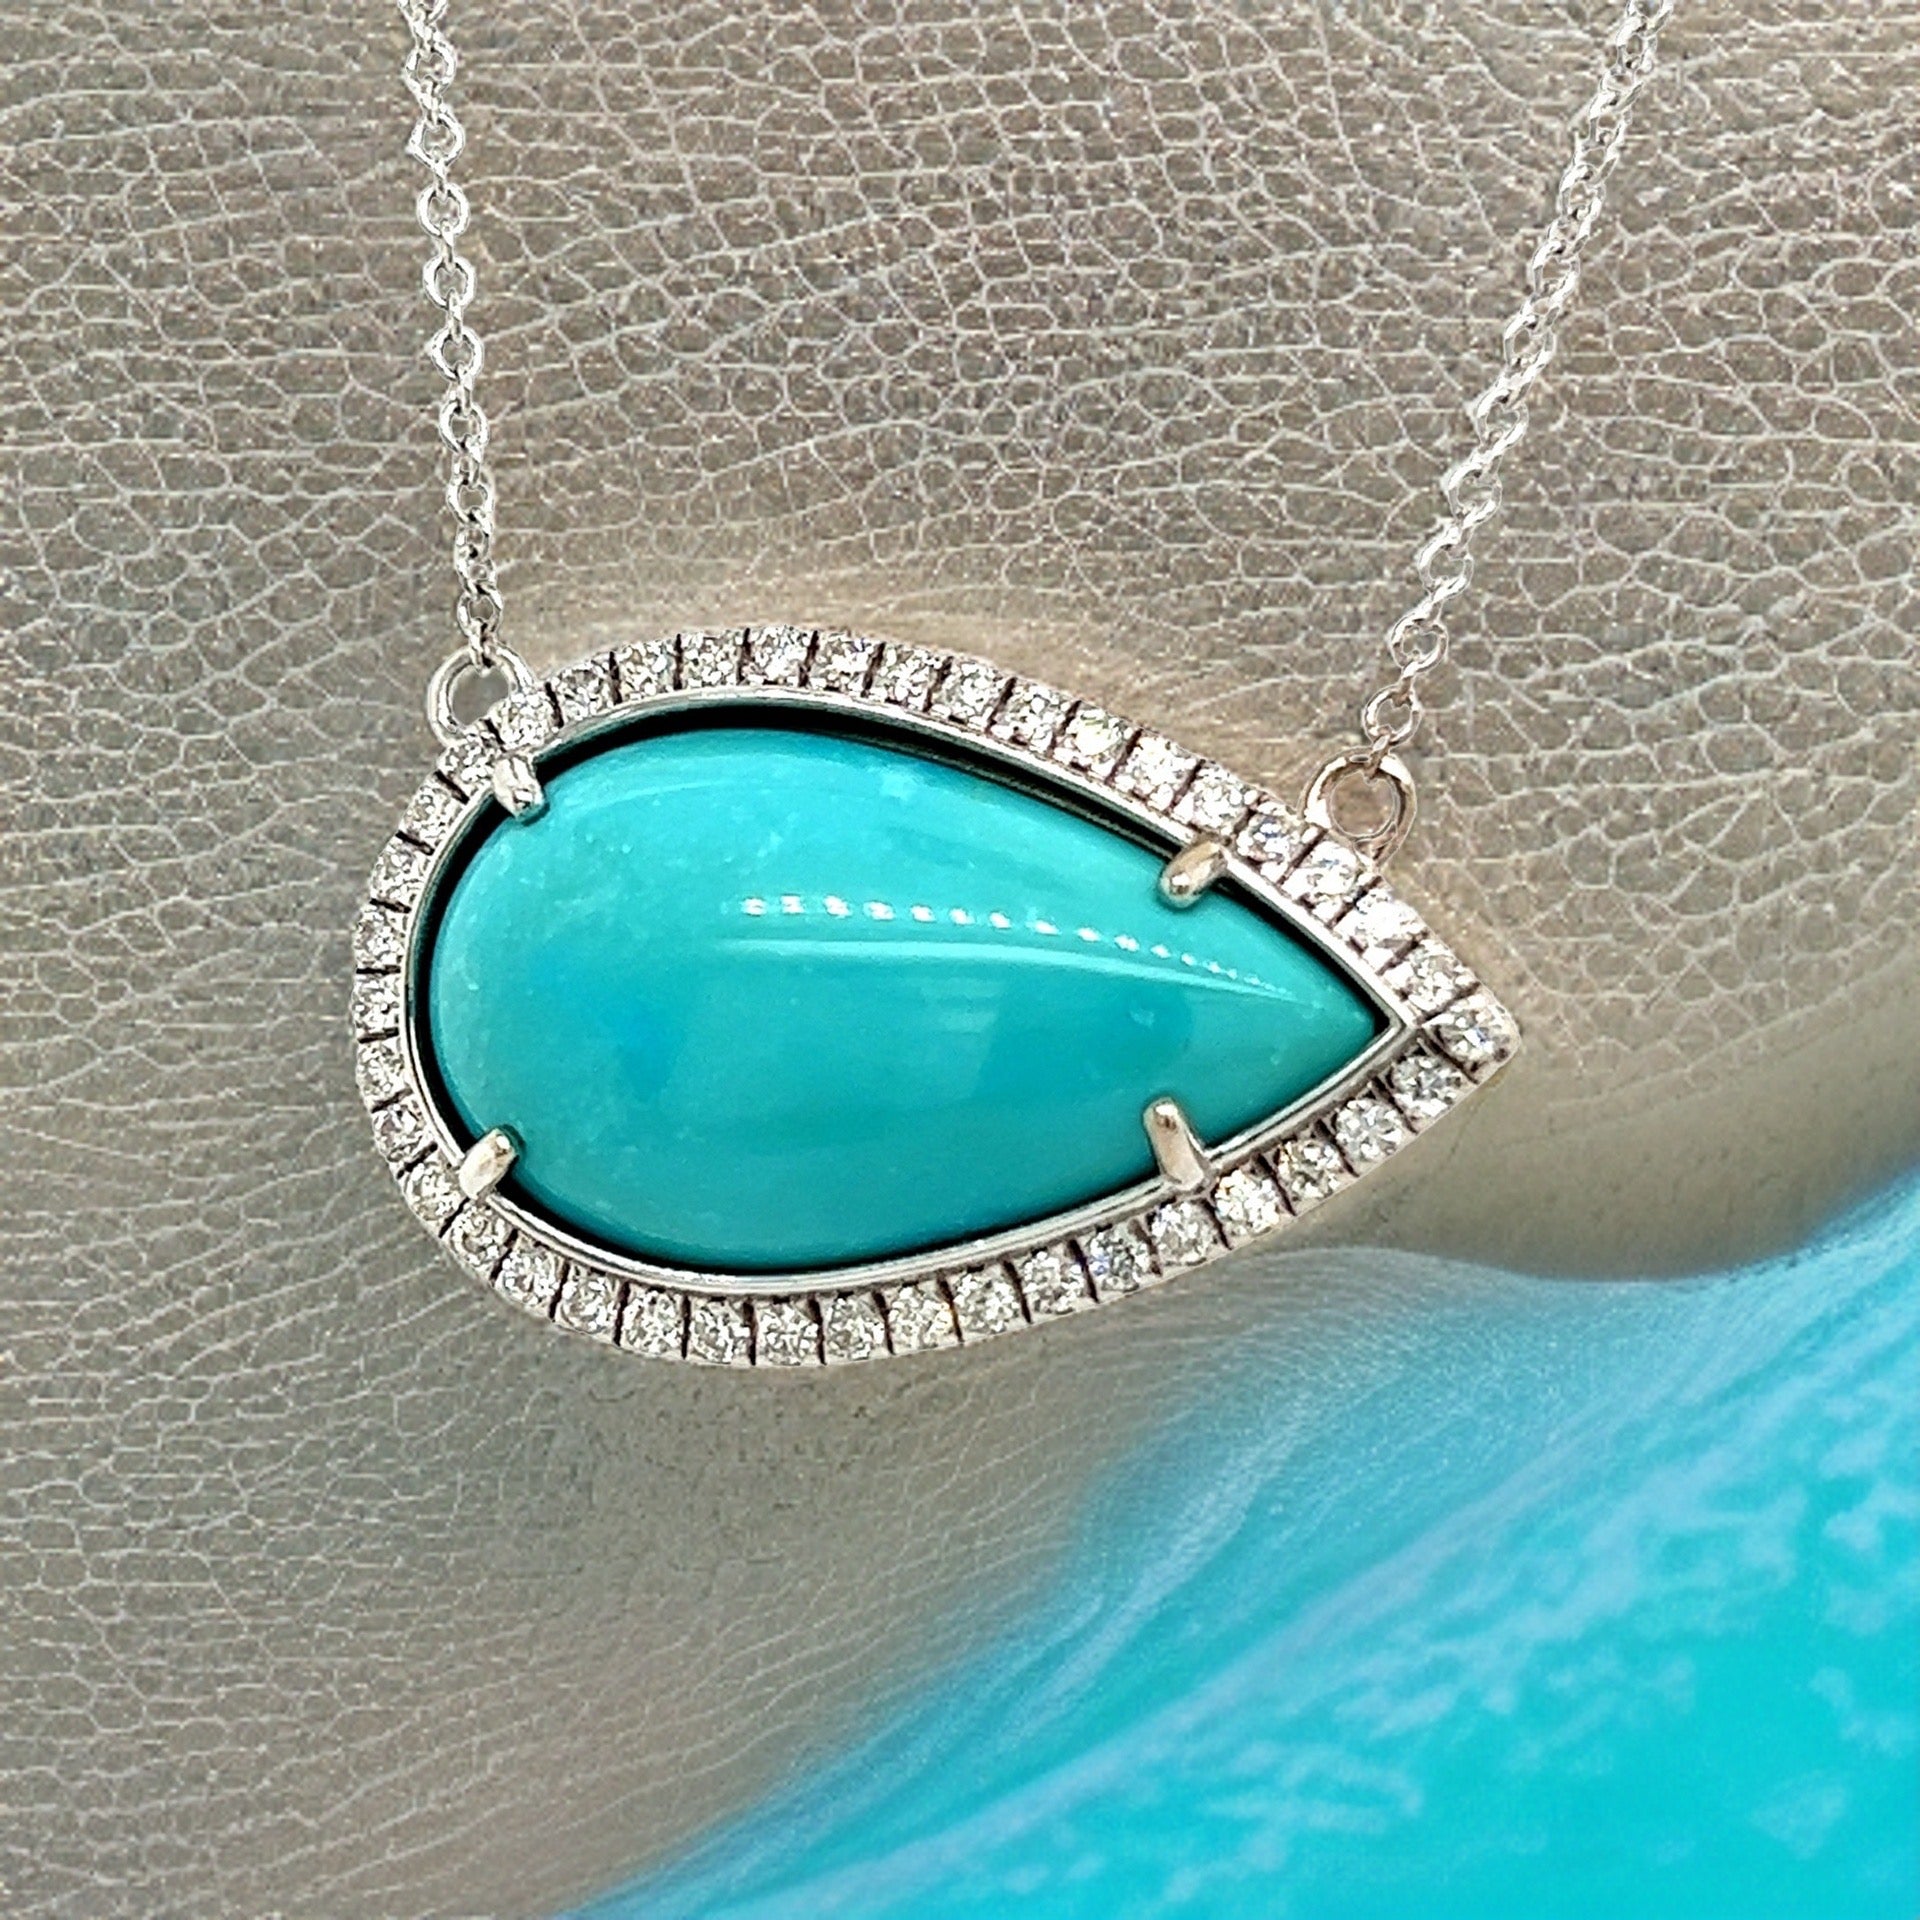 Persian Turquoise Diamond Halo Pendant With Chain 18.5" 14k WG 11.36 TCW Certified $5,950 300680 - Certified Fine Jewelry